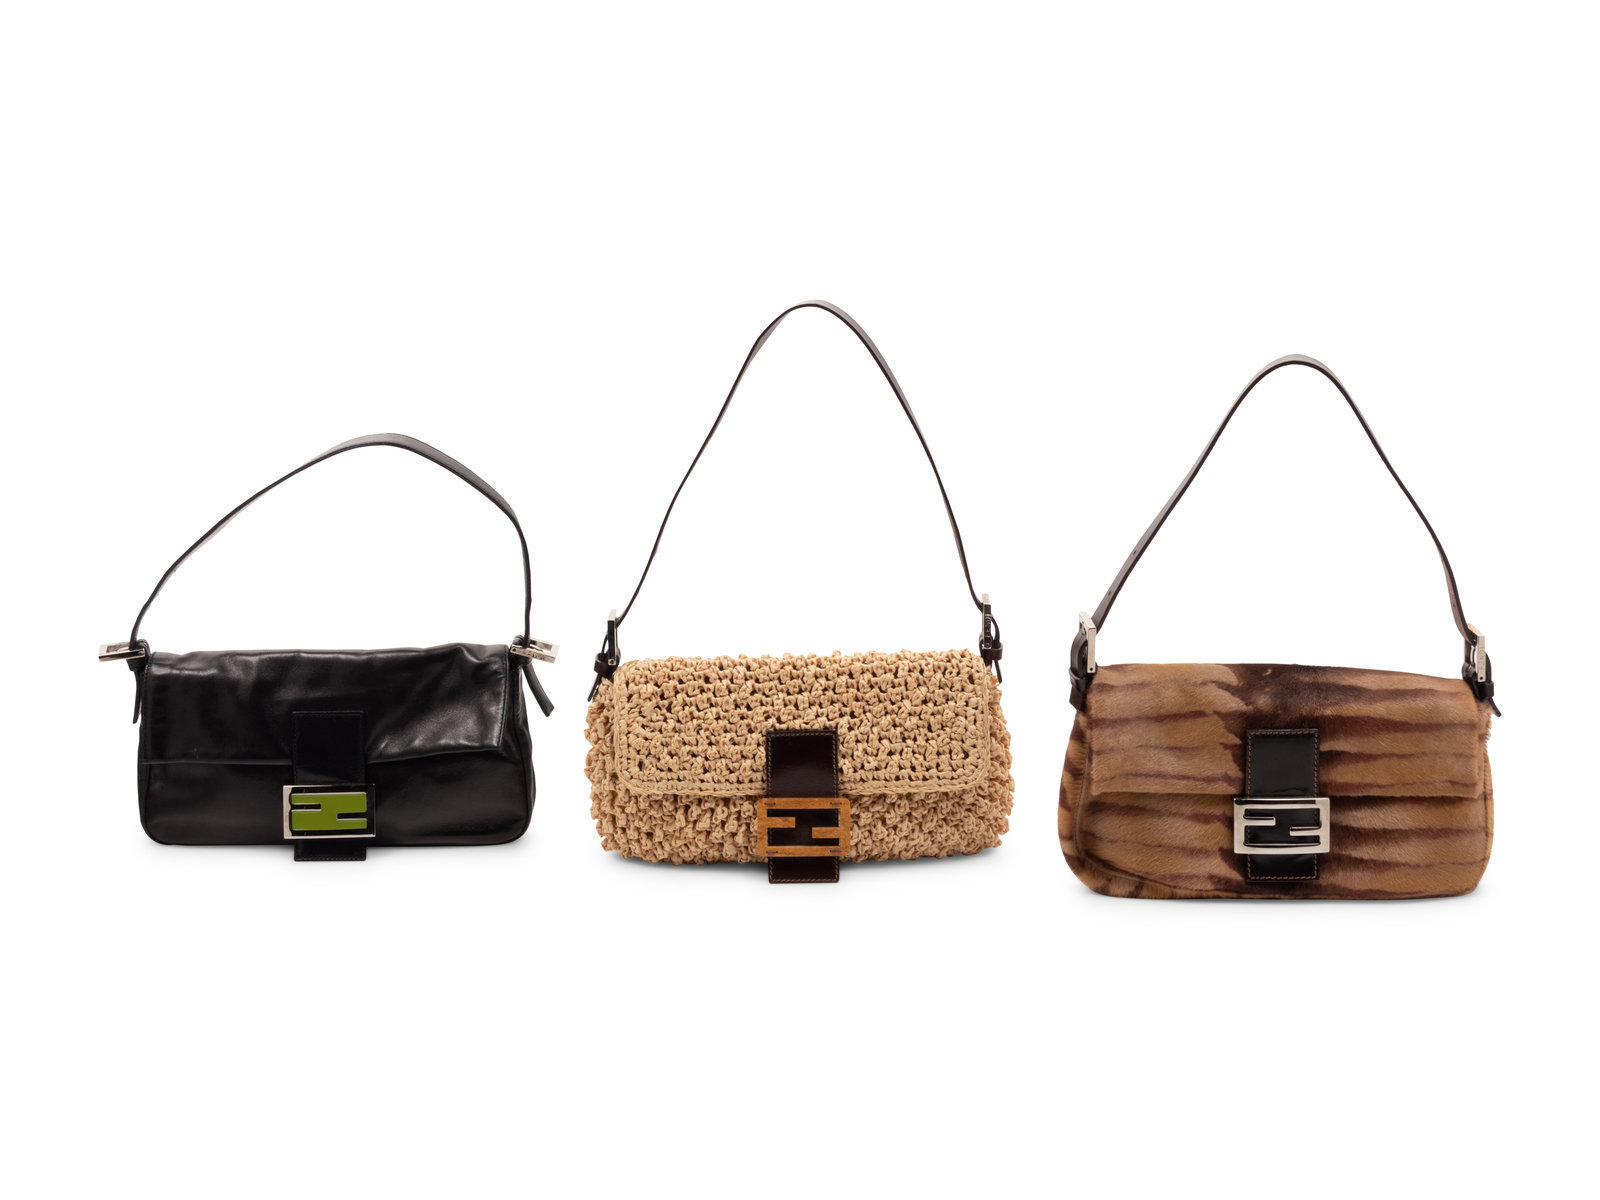 Buy Fendi Handbags & Purses For Sale At Auction